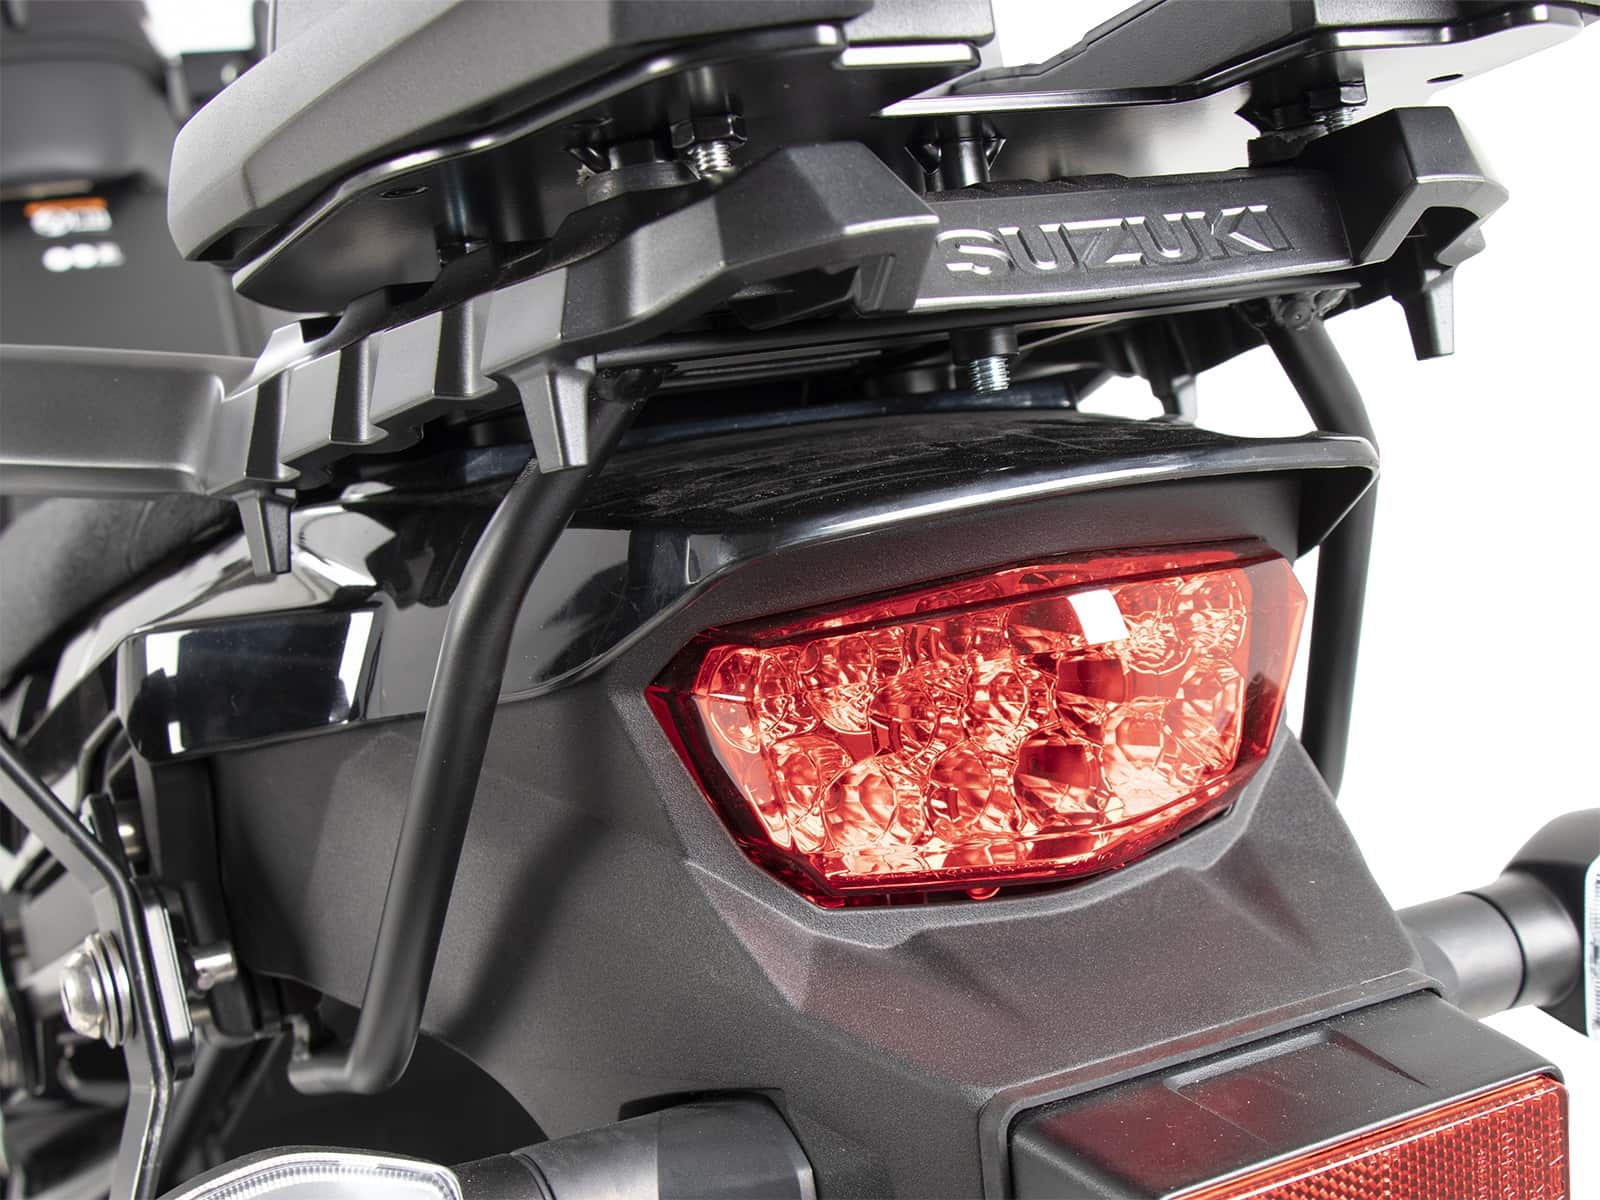 Hepco en Becker versteviging bagagedrager Suzuki V-Strom 1050 vanaf 2020